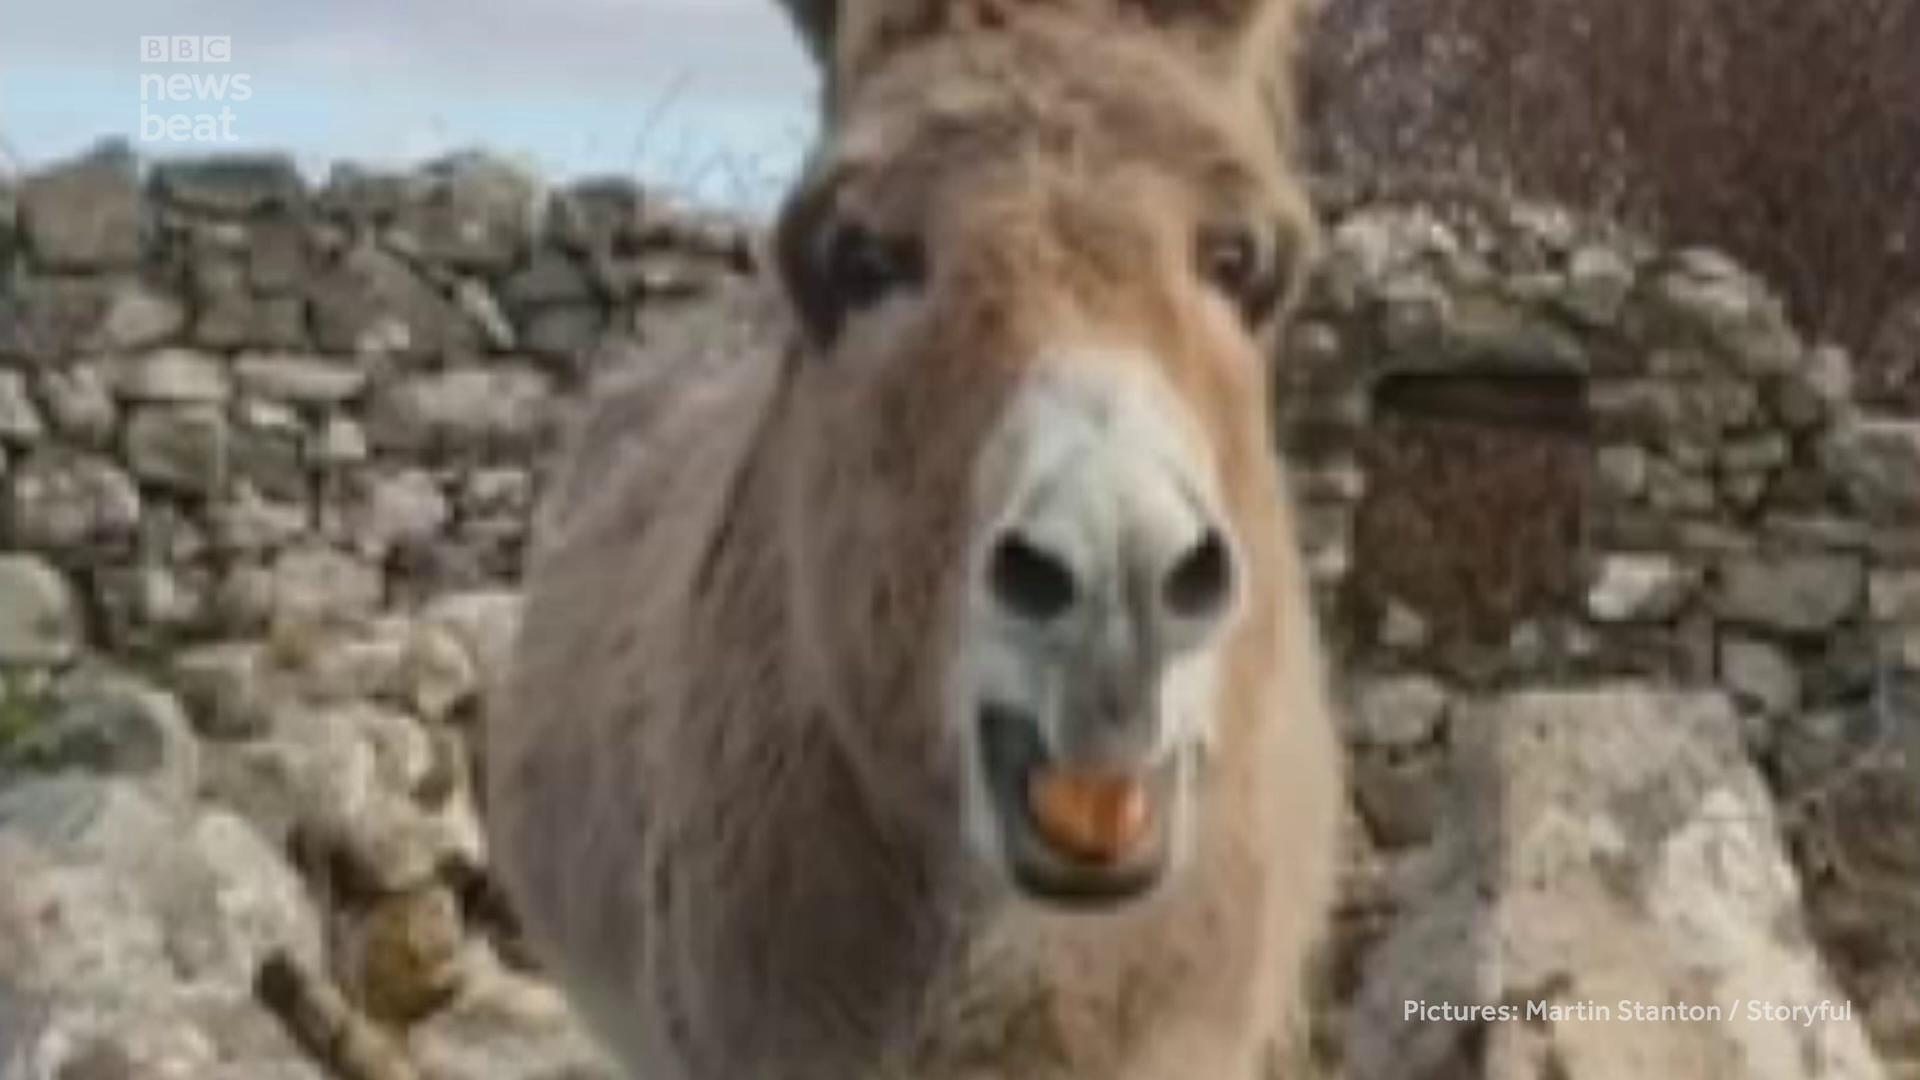 Mexico Donkey Show Footage